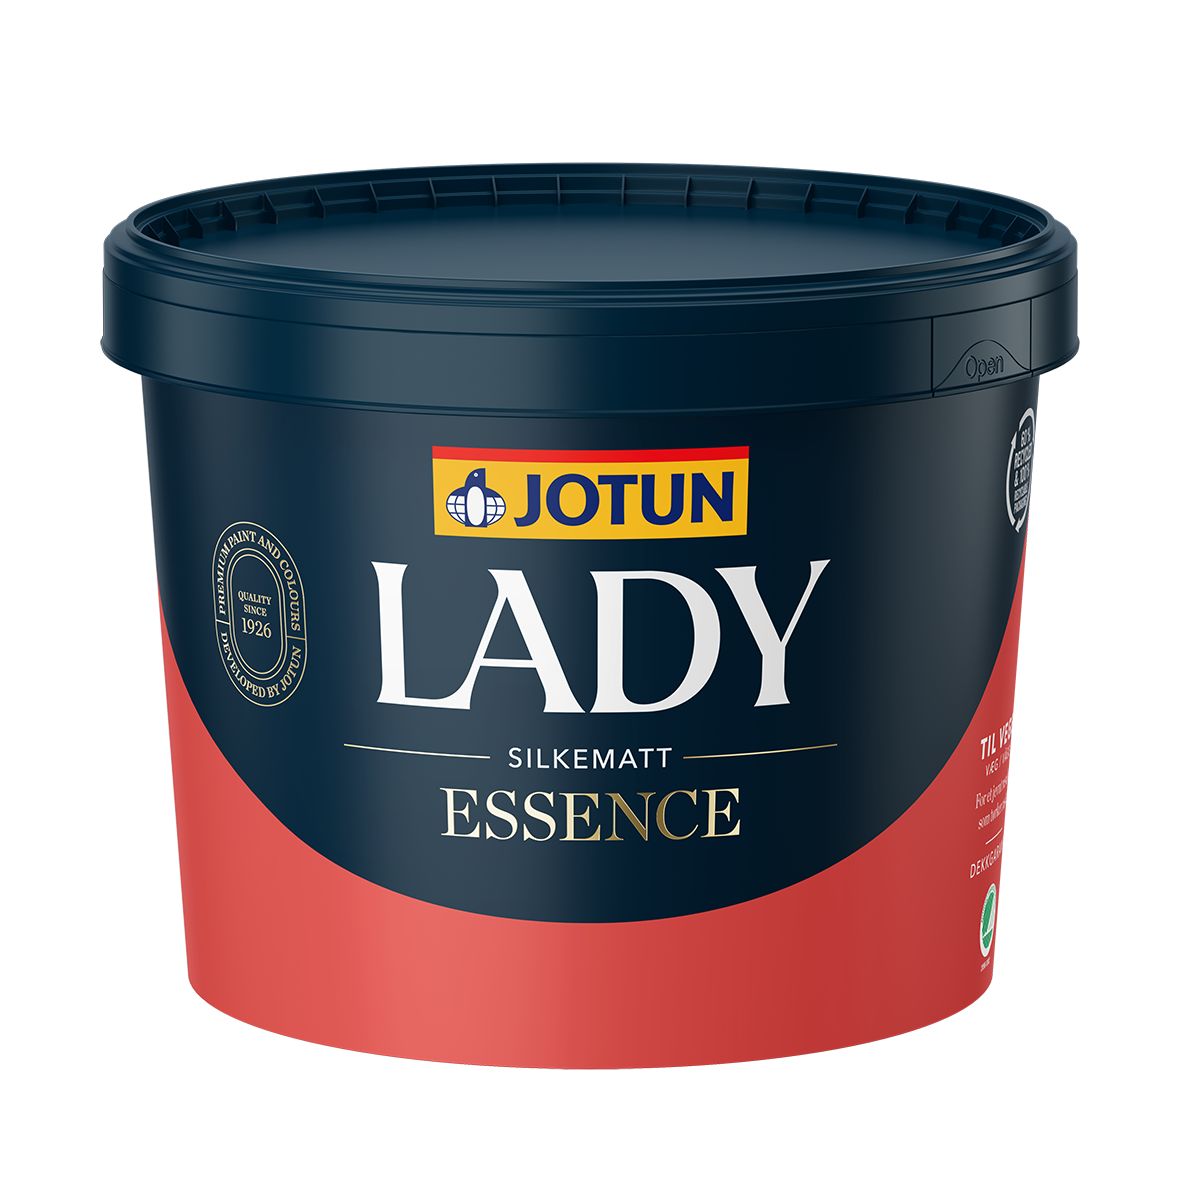 LADY Essence